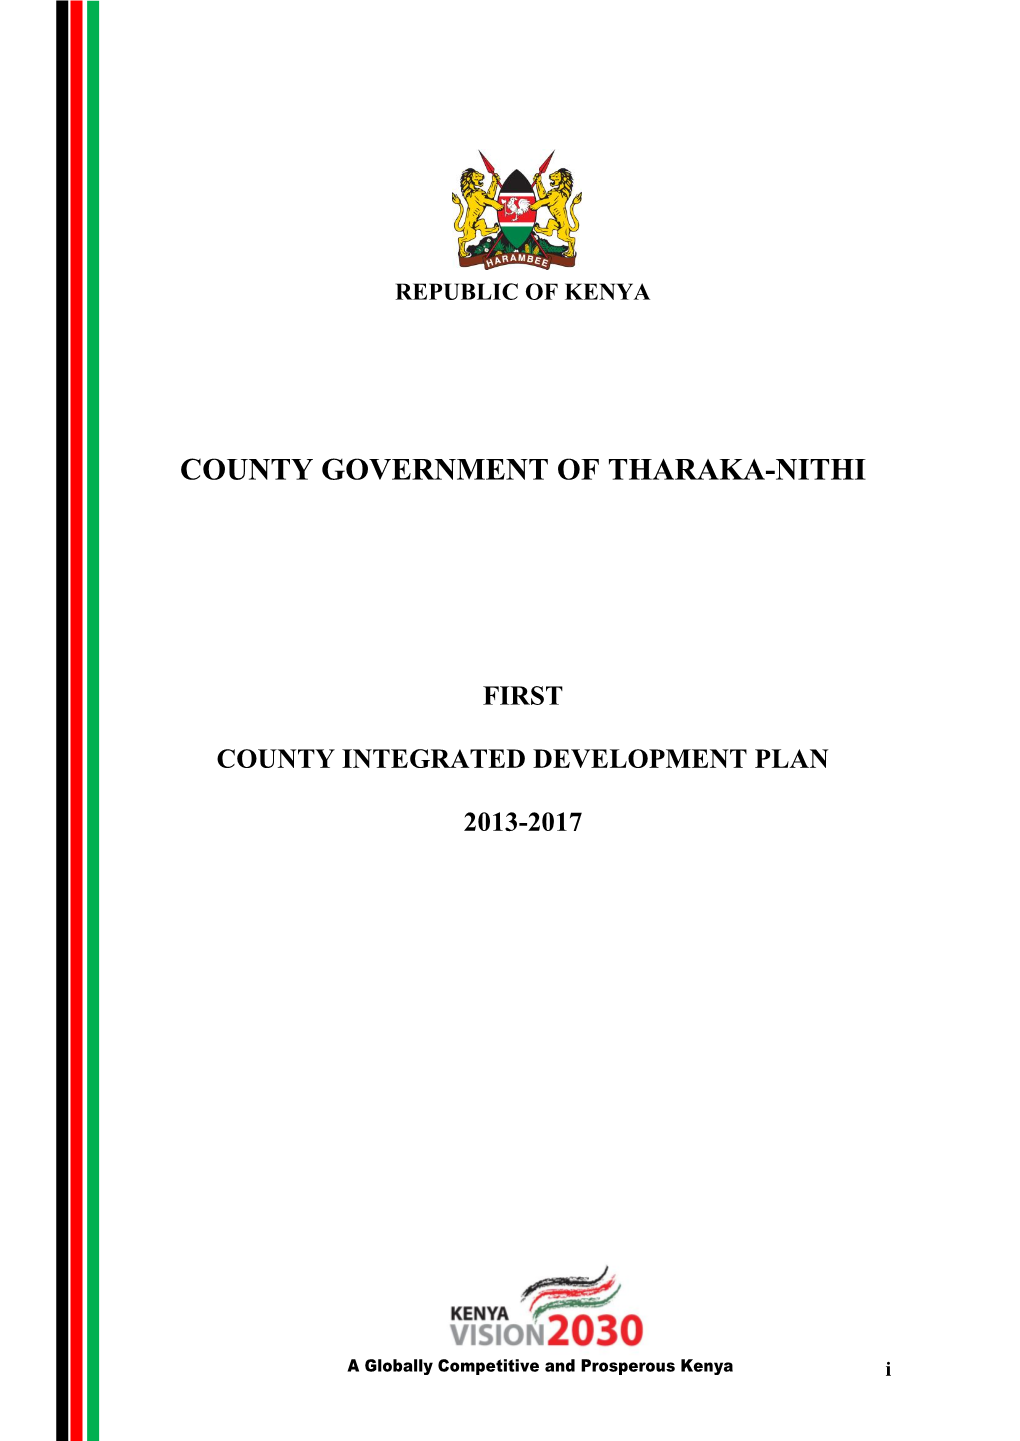 County Government of Tharaka-Nithi